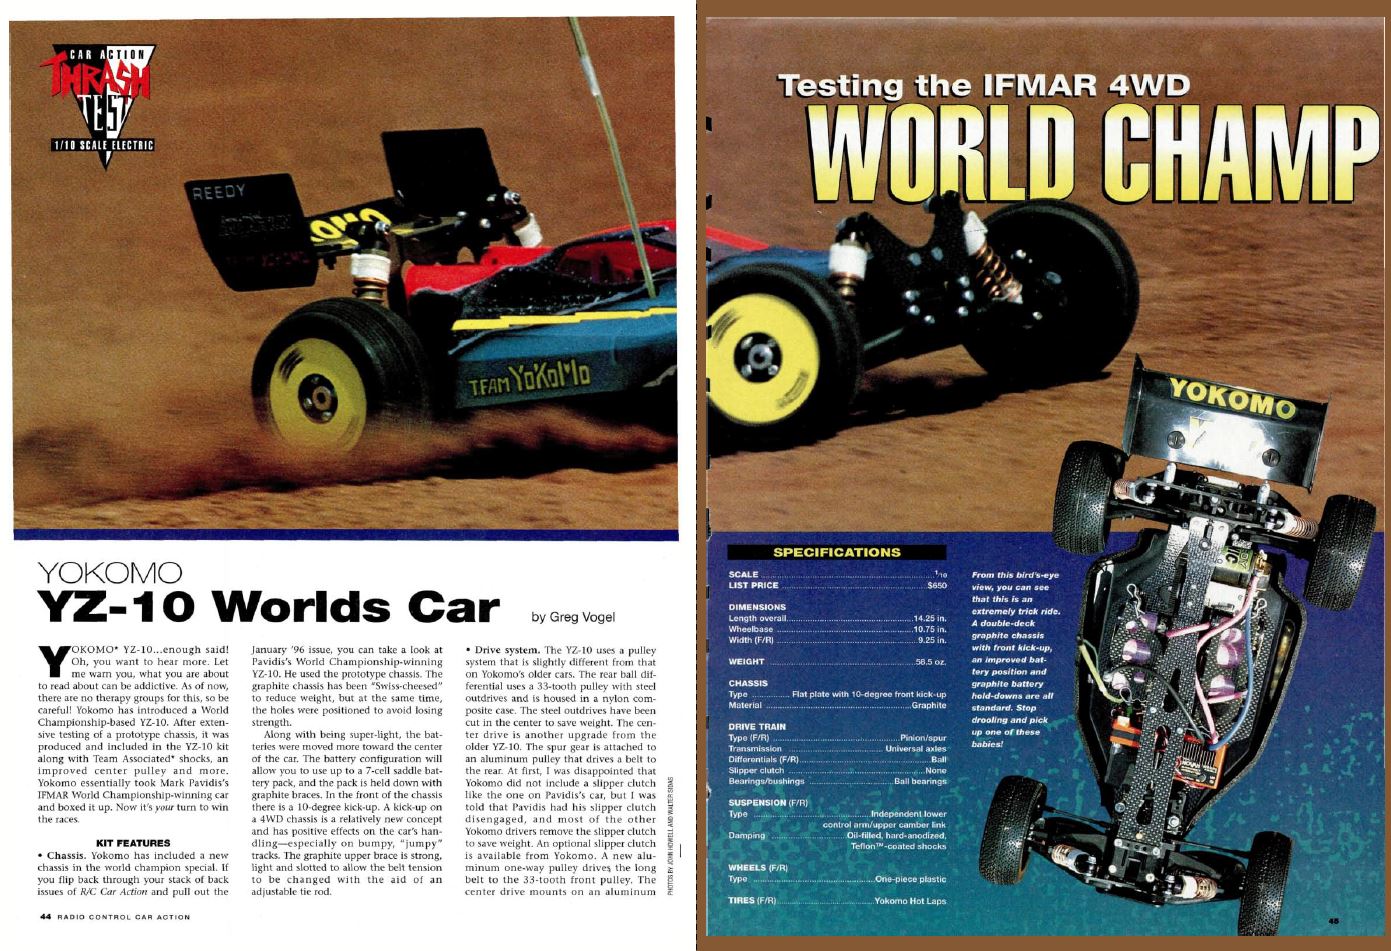 TBT The Team Yokomo YZ-10 Worlds Car is reviewed in November 1996